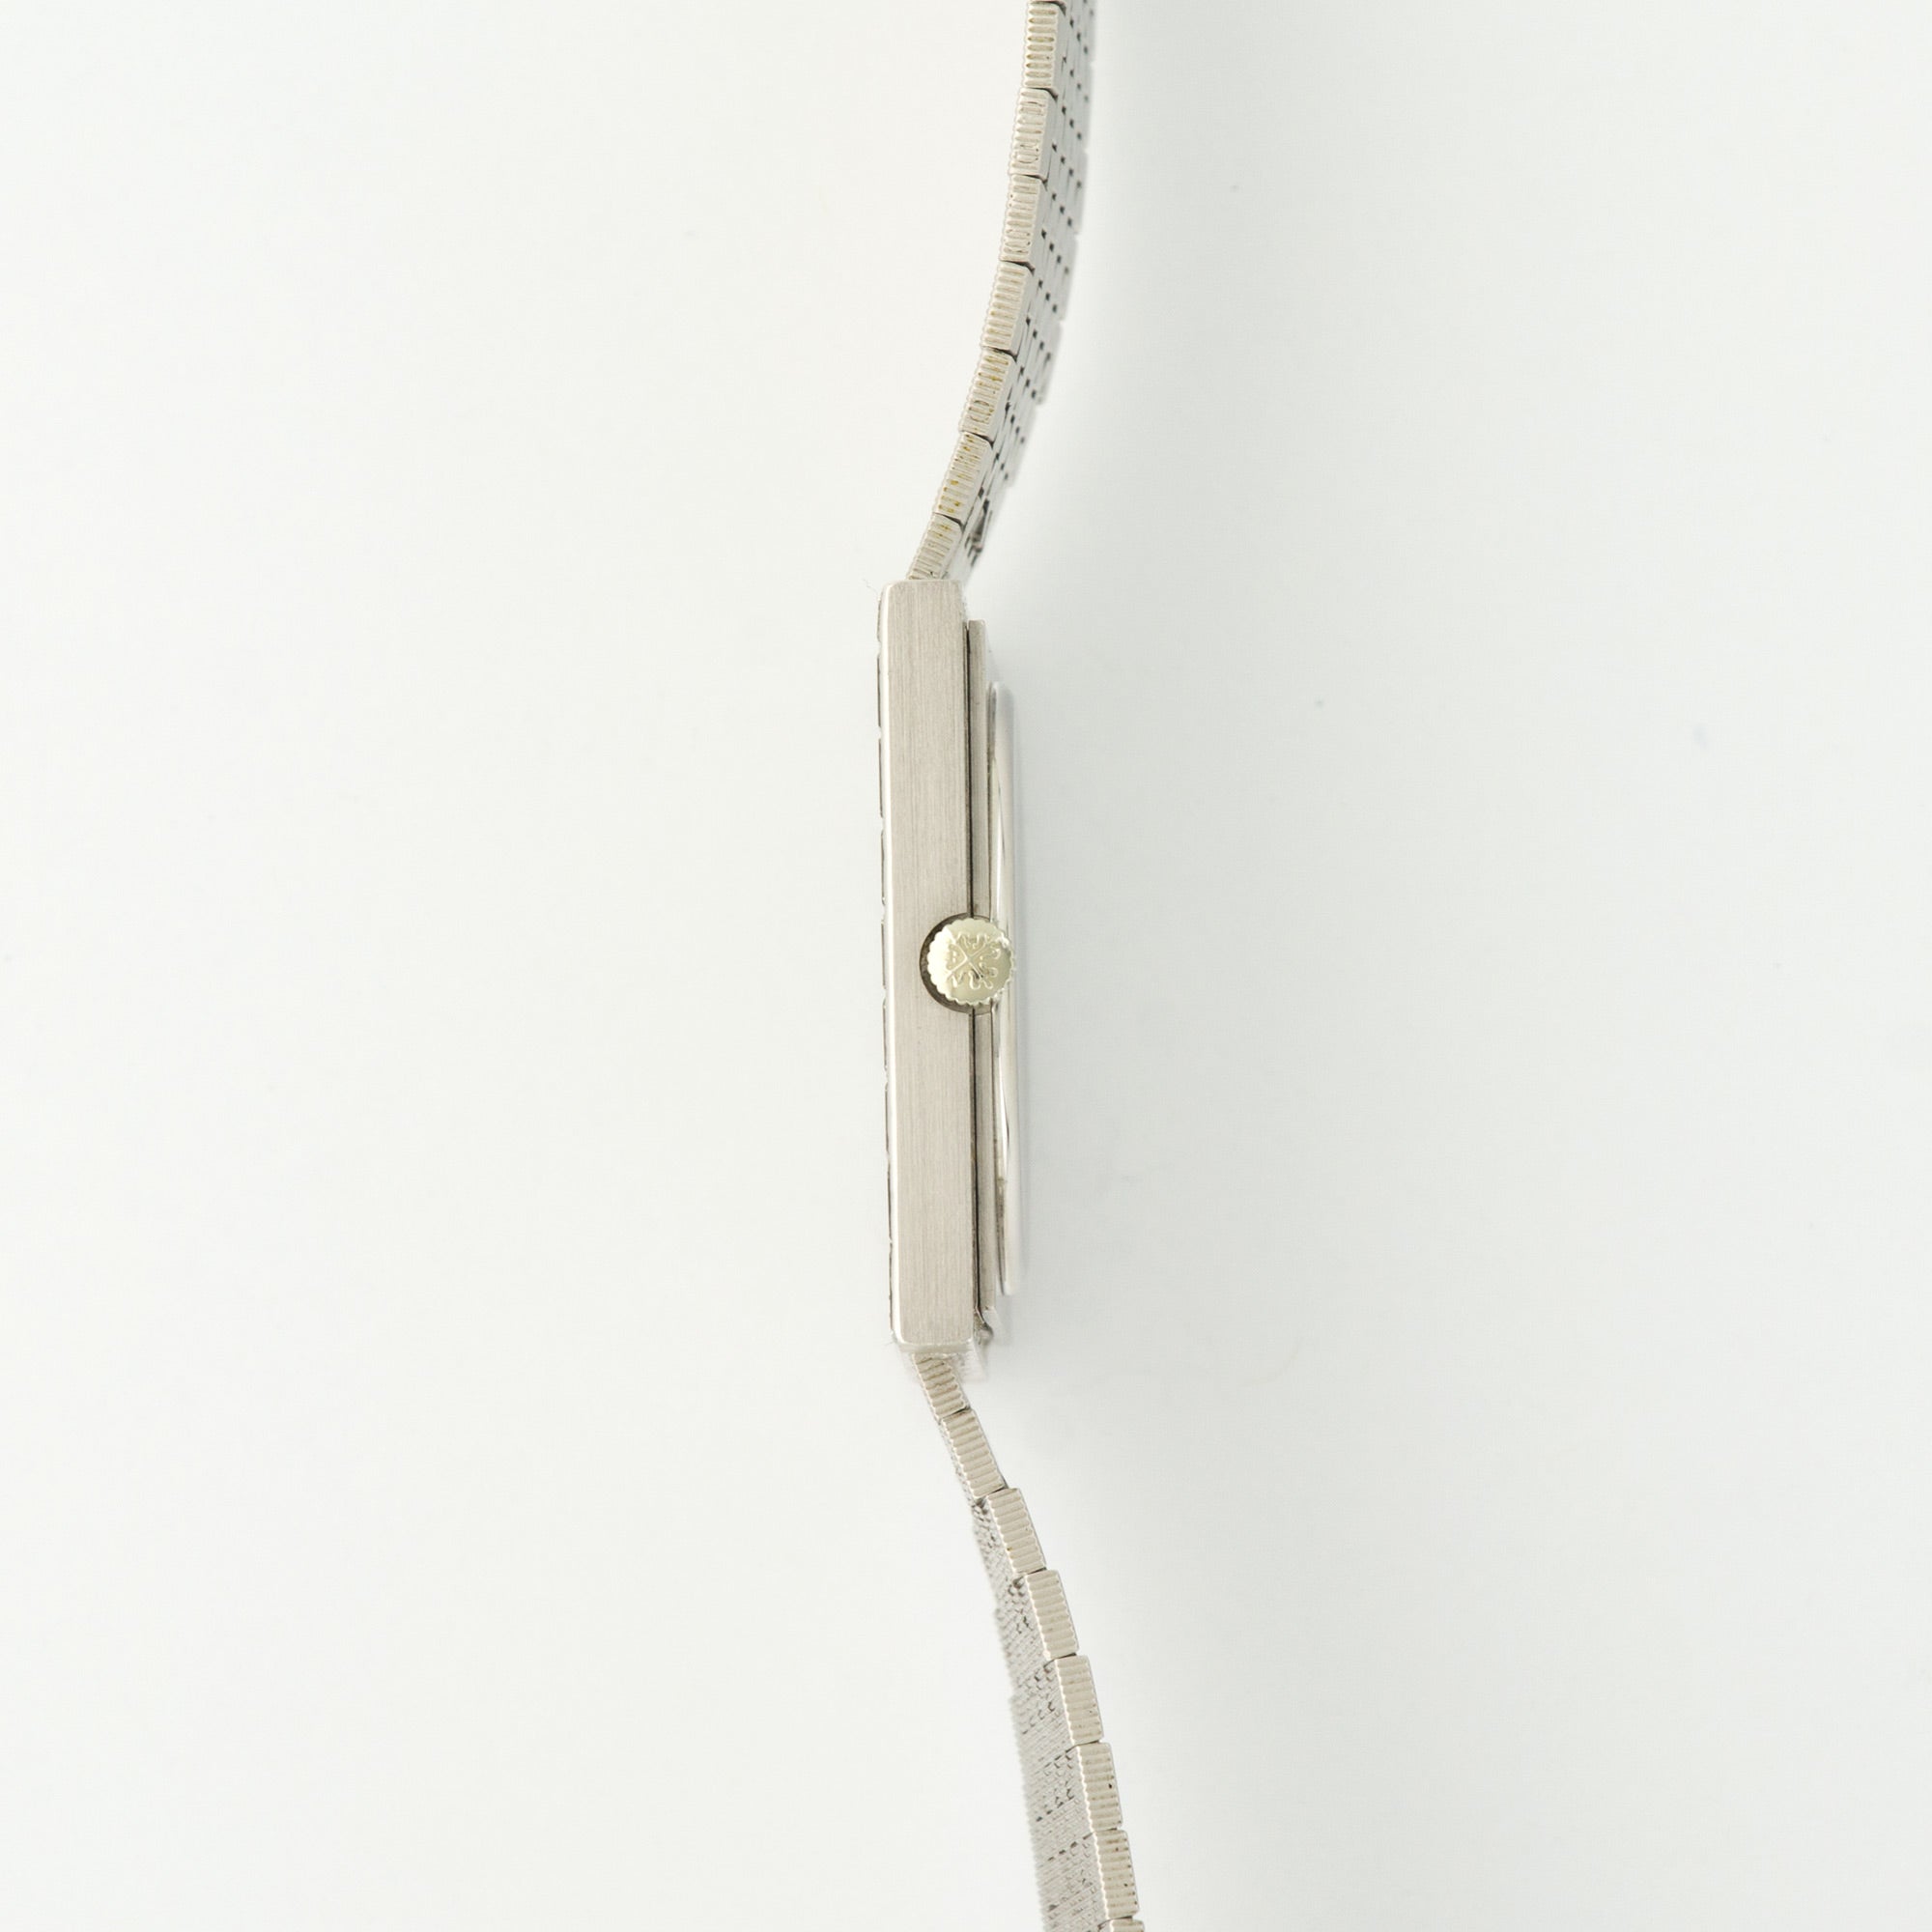 Patek Philippe - Patek Philippe White Gold Rectangular Baguette Diamond Watch Ref. 3540 - The Keystone Watches